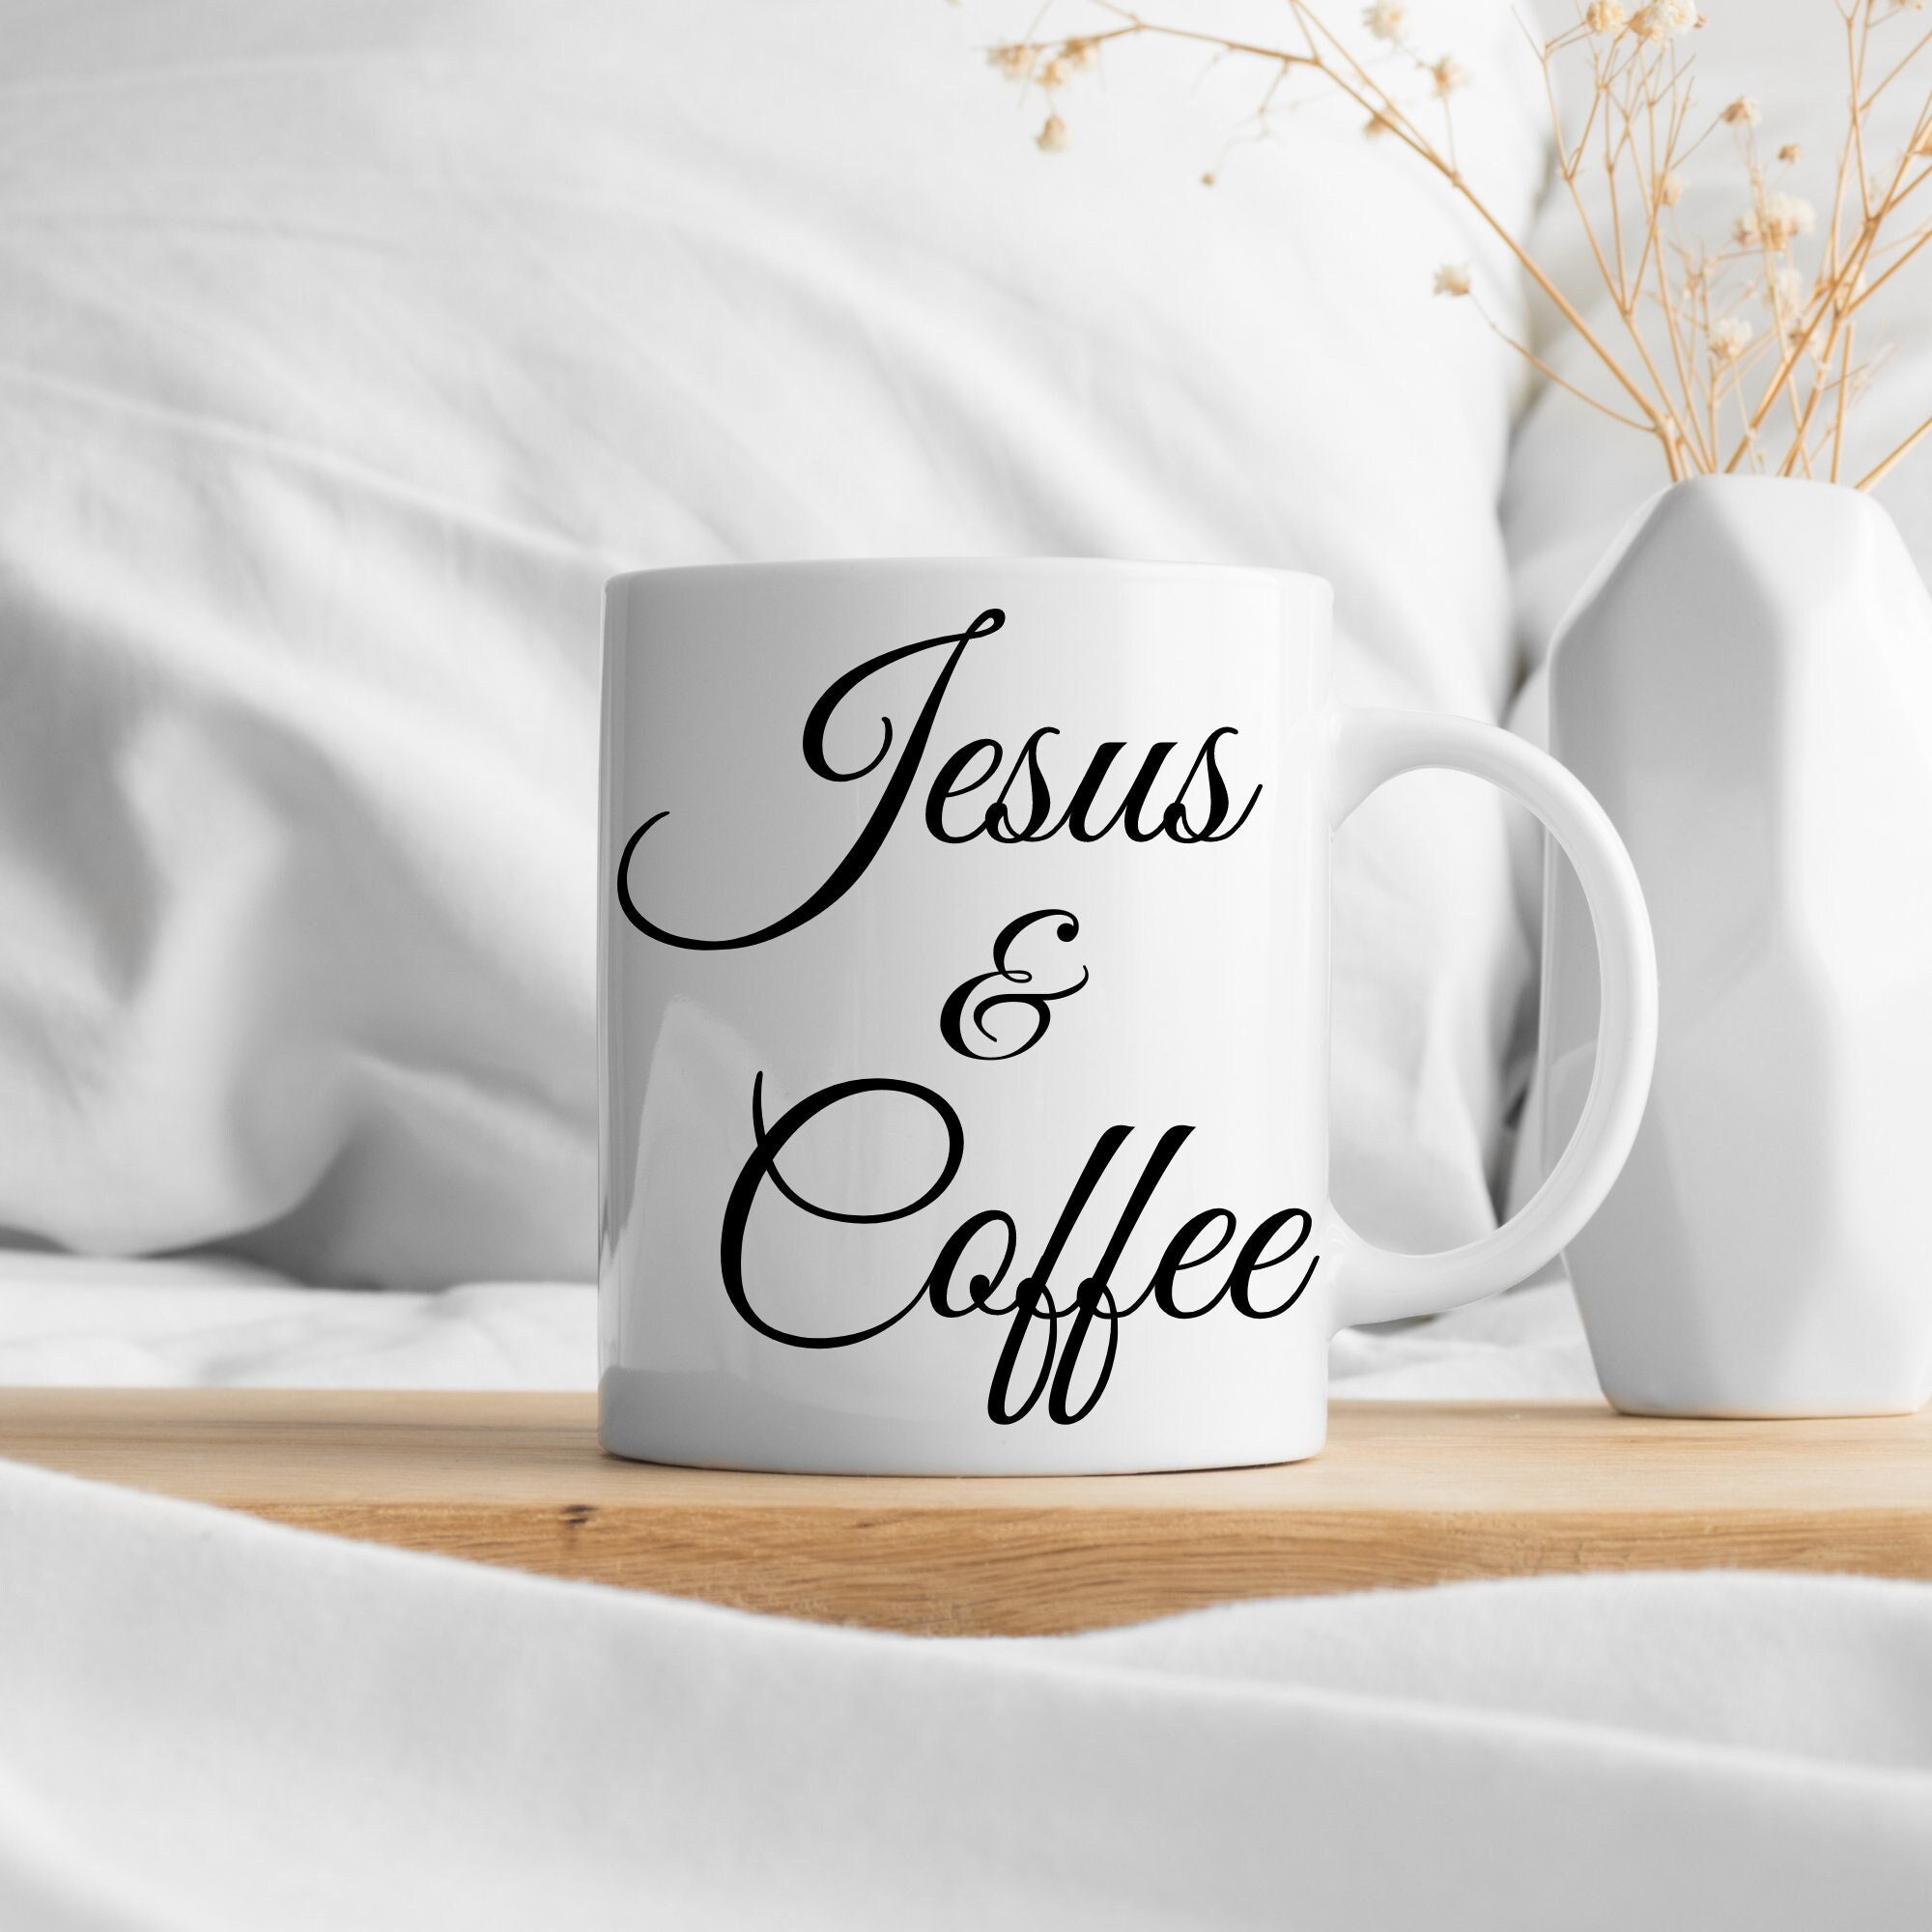 All I Need Today Coffee Mug // Coffee and Jesus Mug // Inspirational M –  Fox & Scout Designs